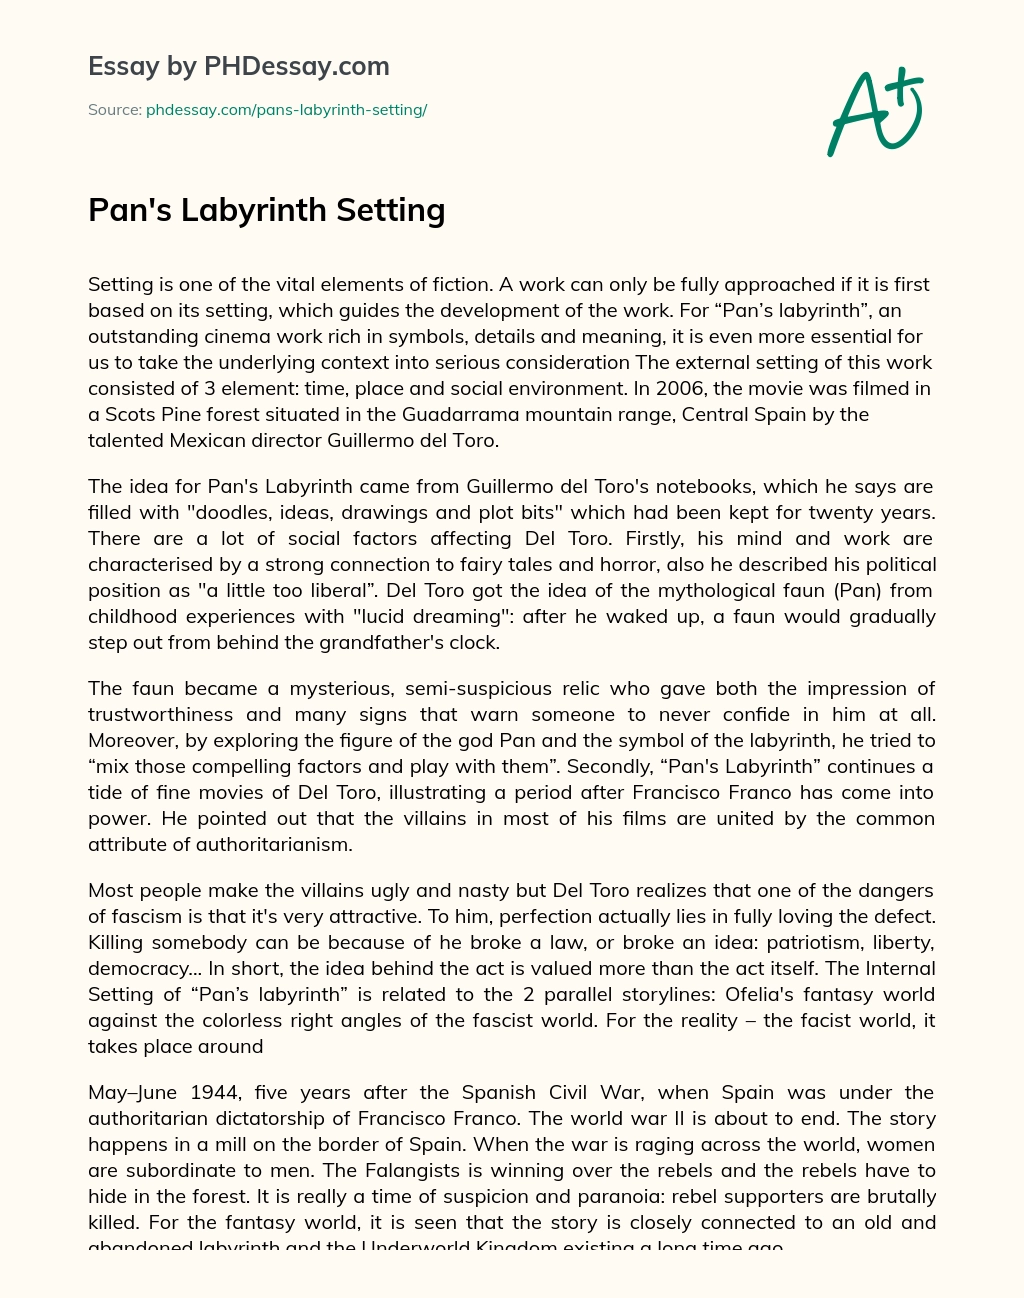 Pan’s Labyrinth Setting essay